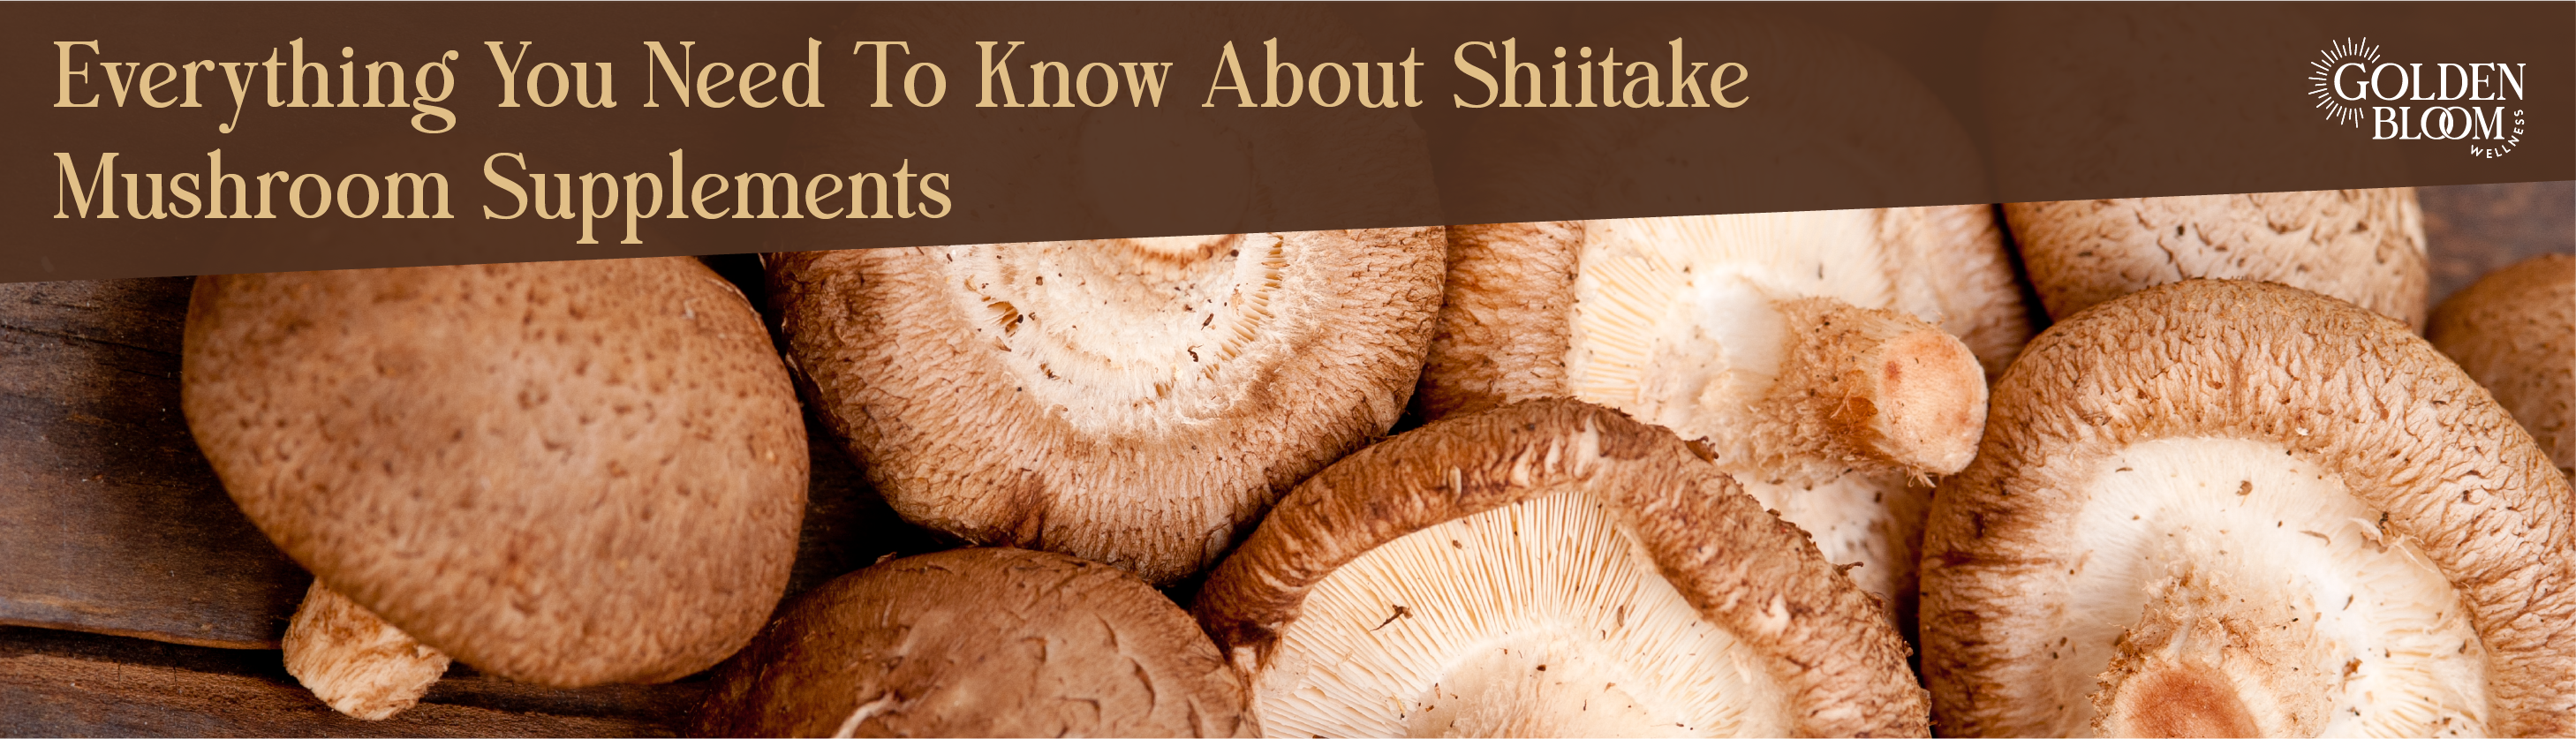 Shiitake Mushroom Banner